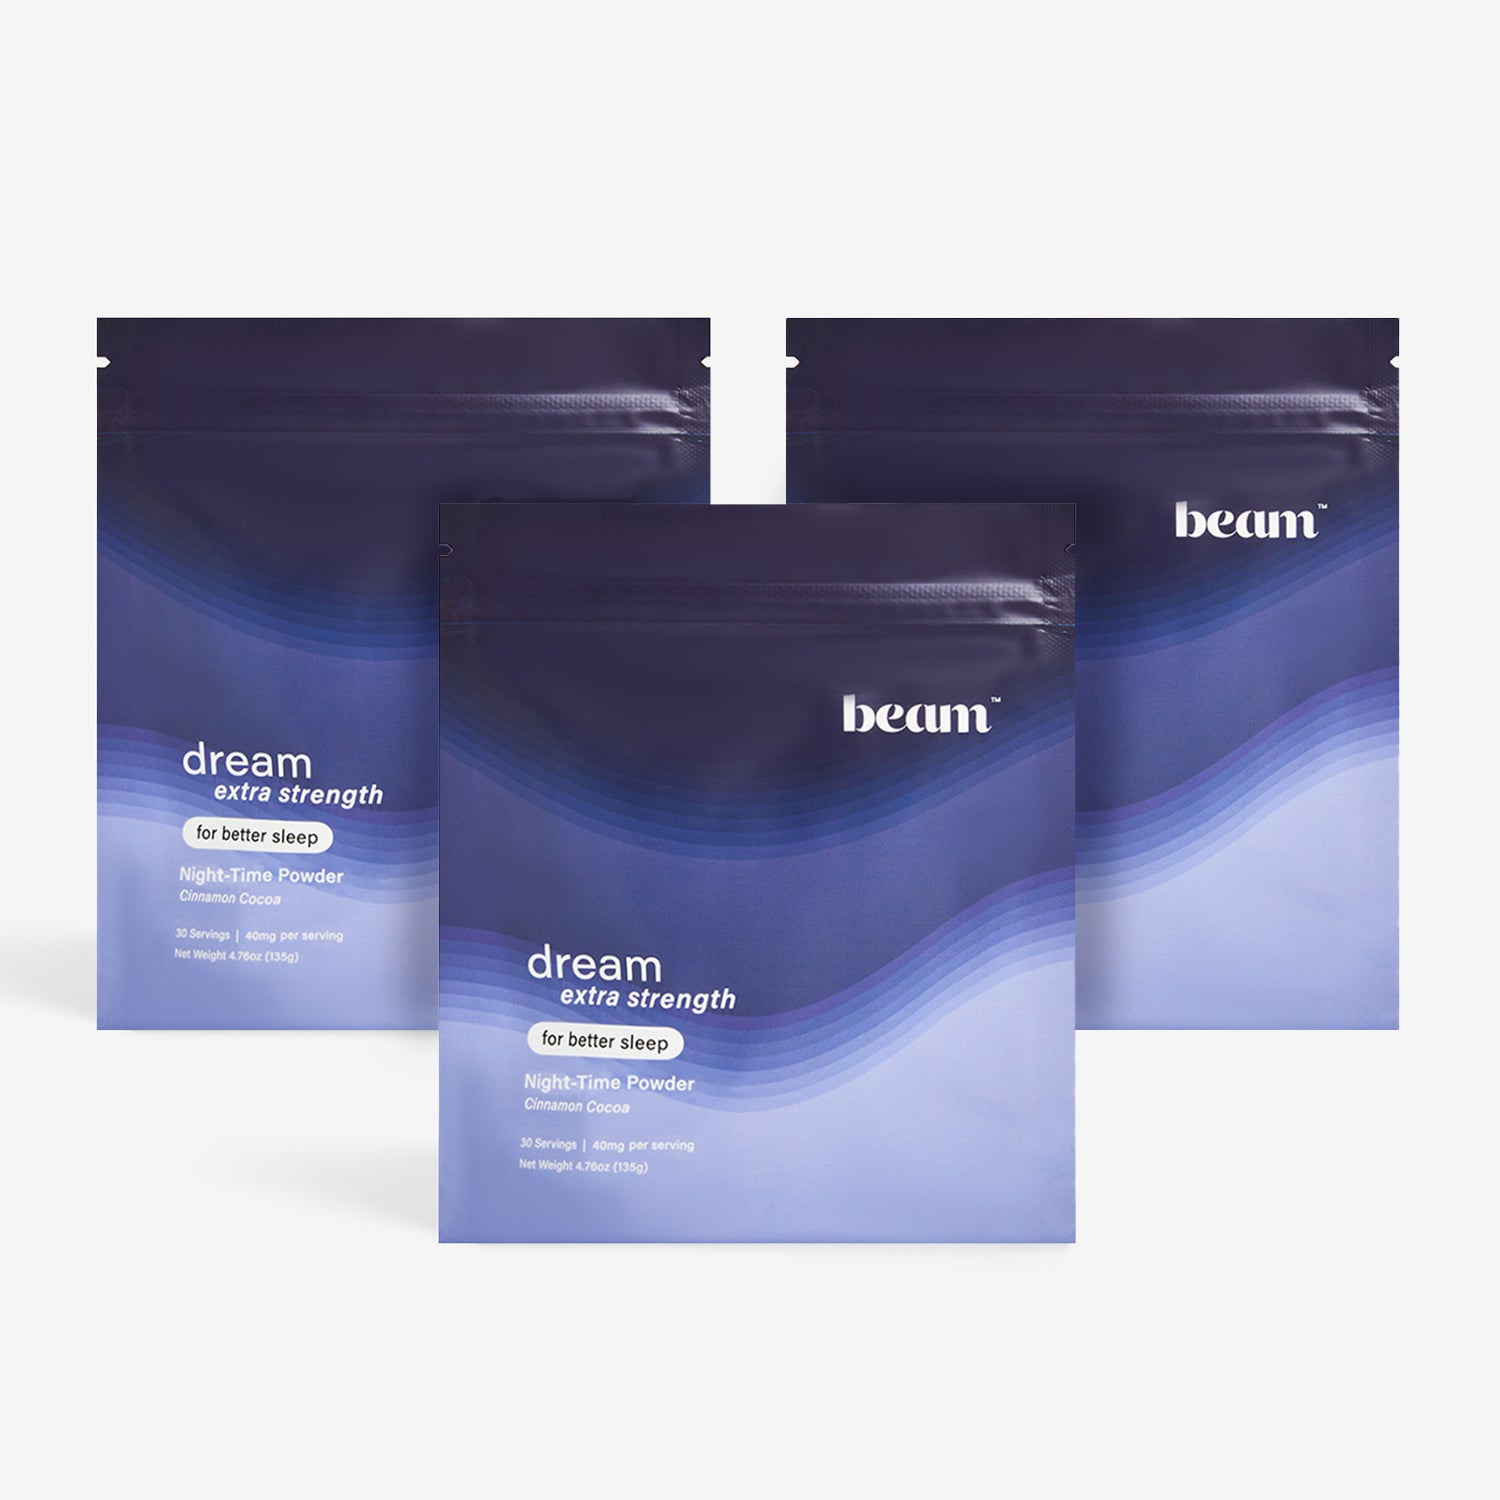 Extra Strength Dream Powder — save 30%, 3-month supply